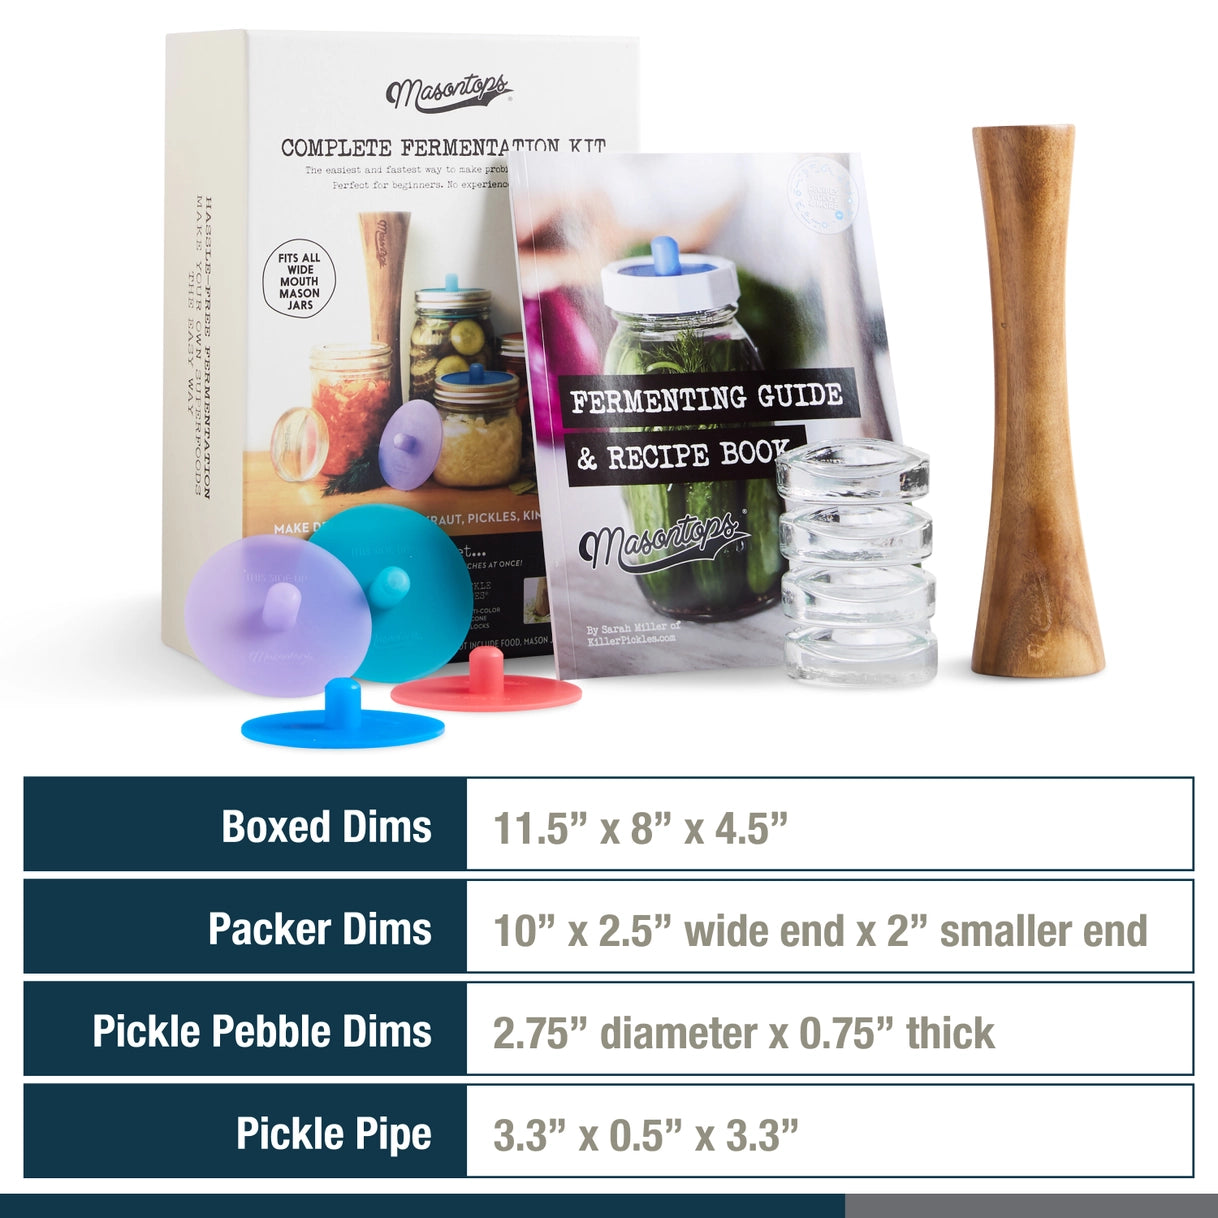 Masontops - Wide Mouth Complete Fermentation Kit for Mason Jars